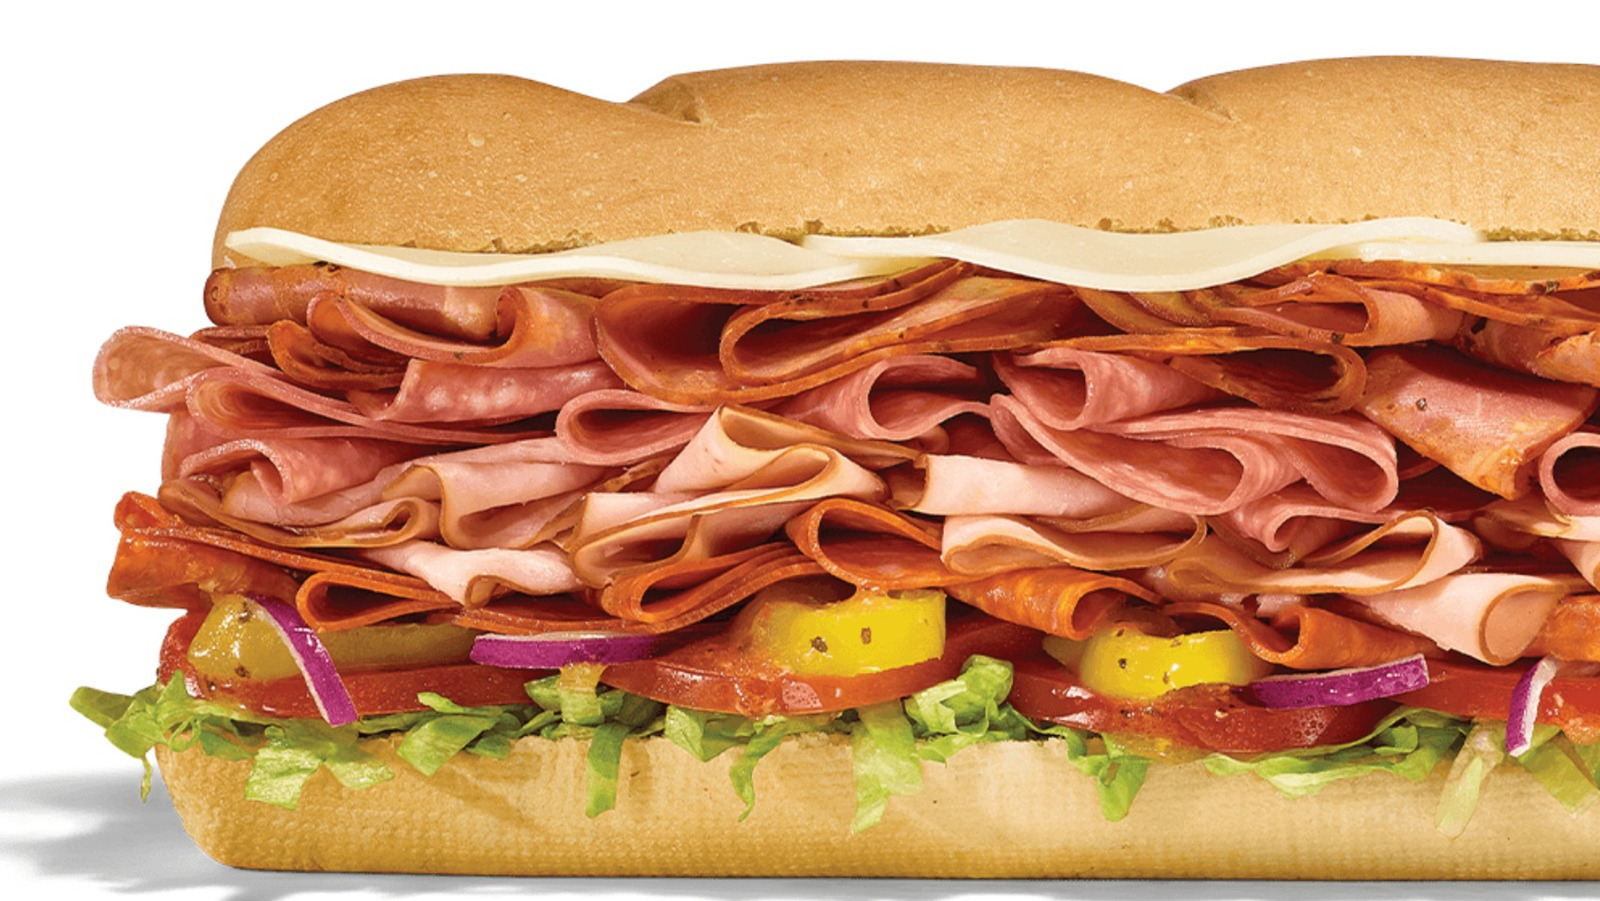 Subway has new Italian sandwiches made with fresh mozzarella